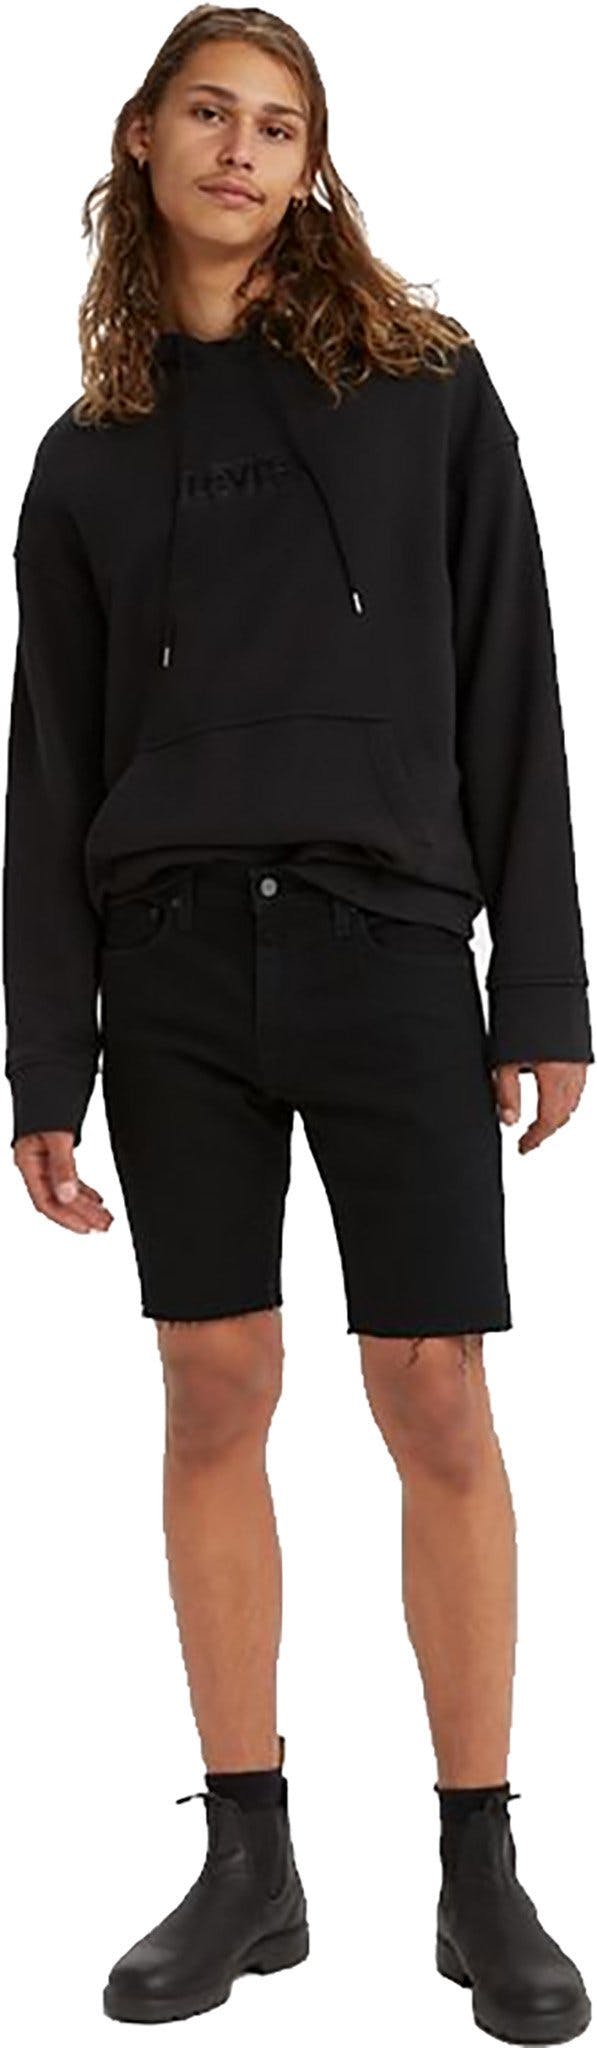 Product image for 412 Slim Fit Denim Shorts - Men's